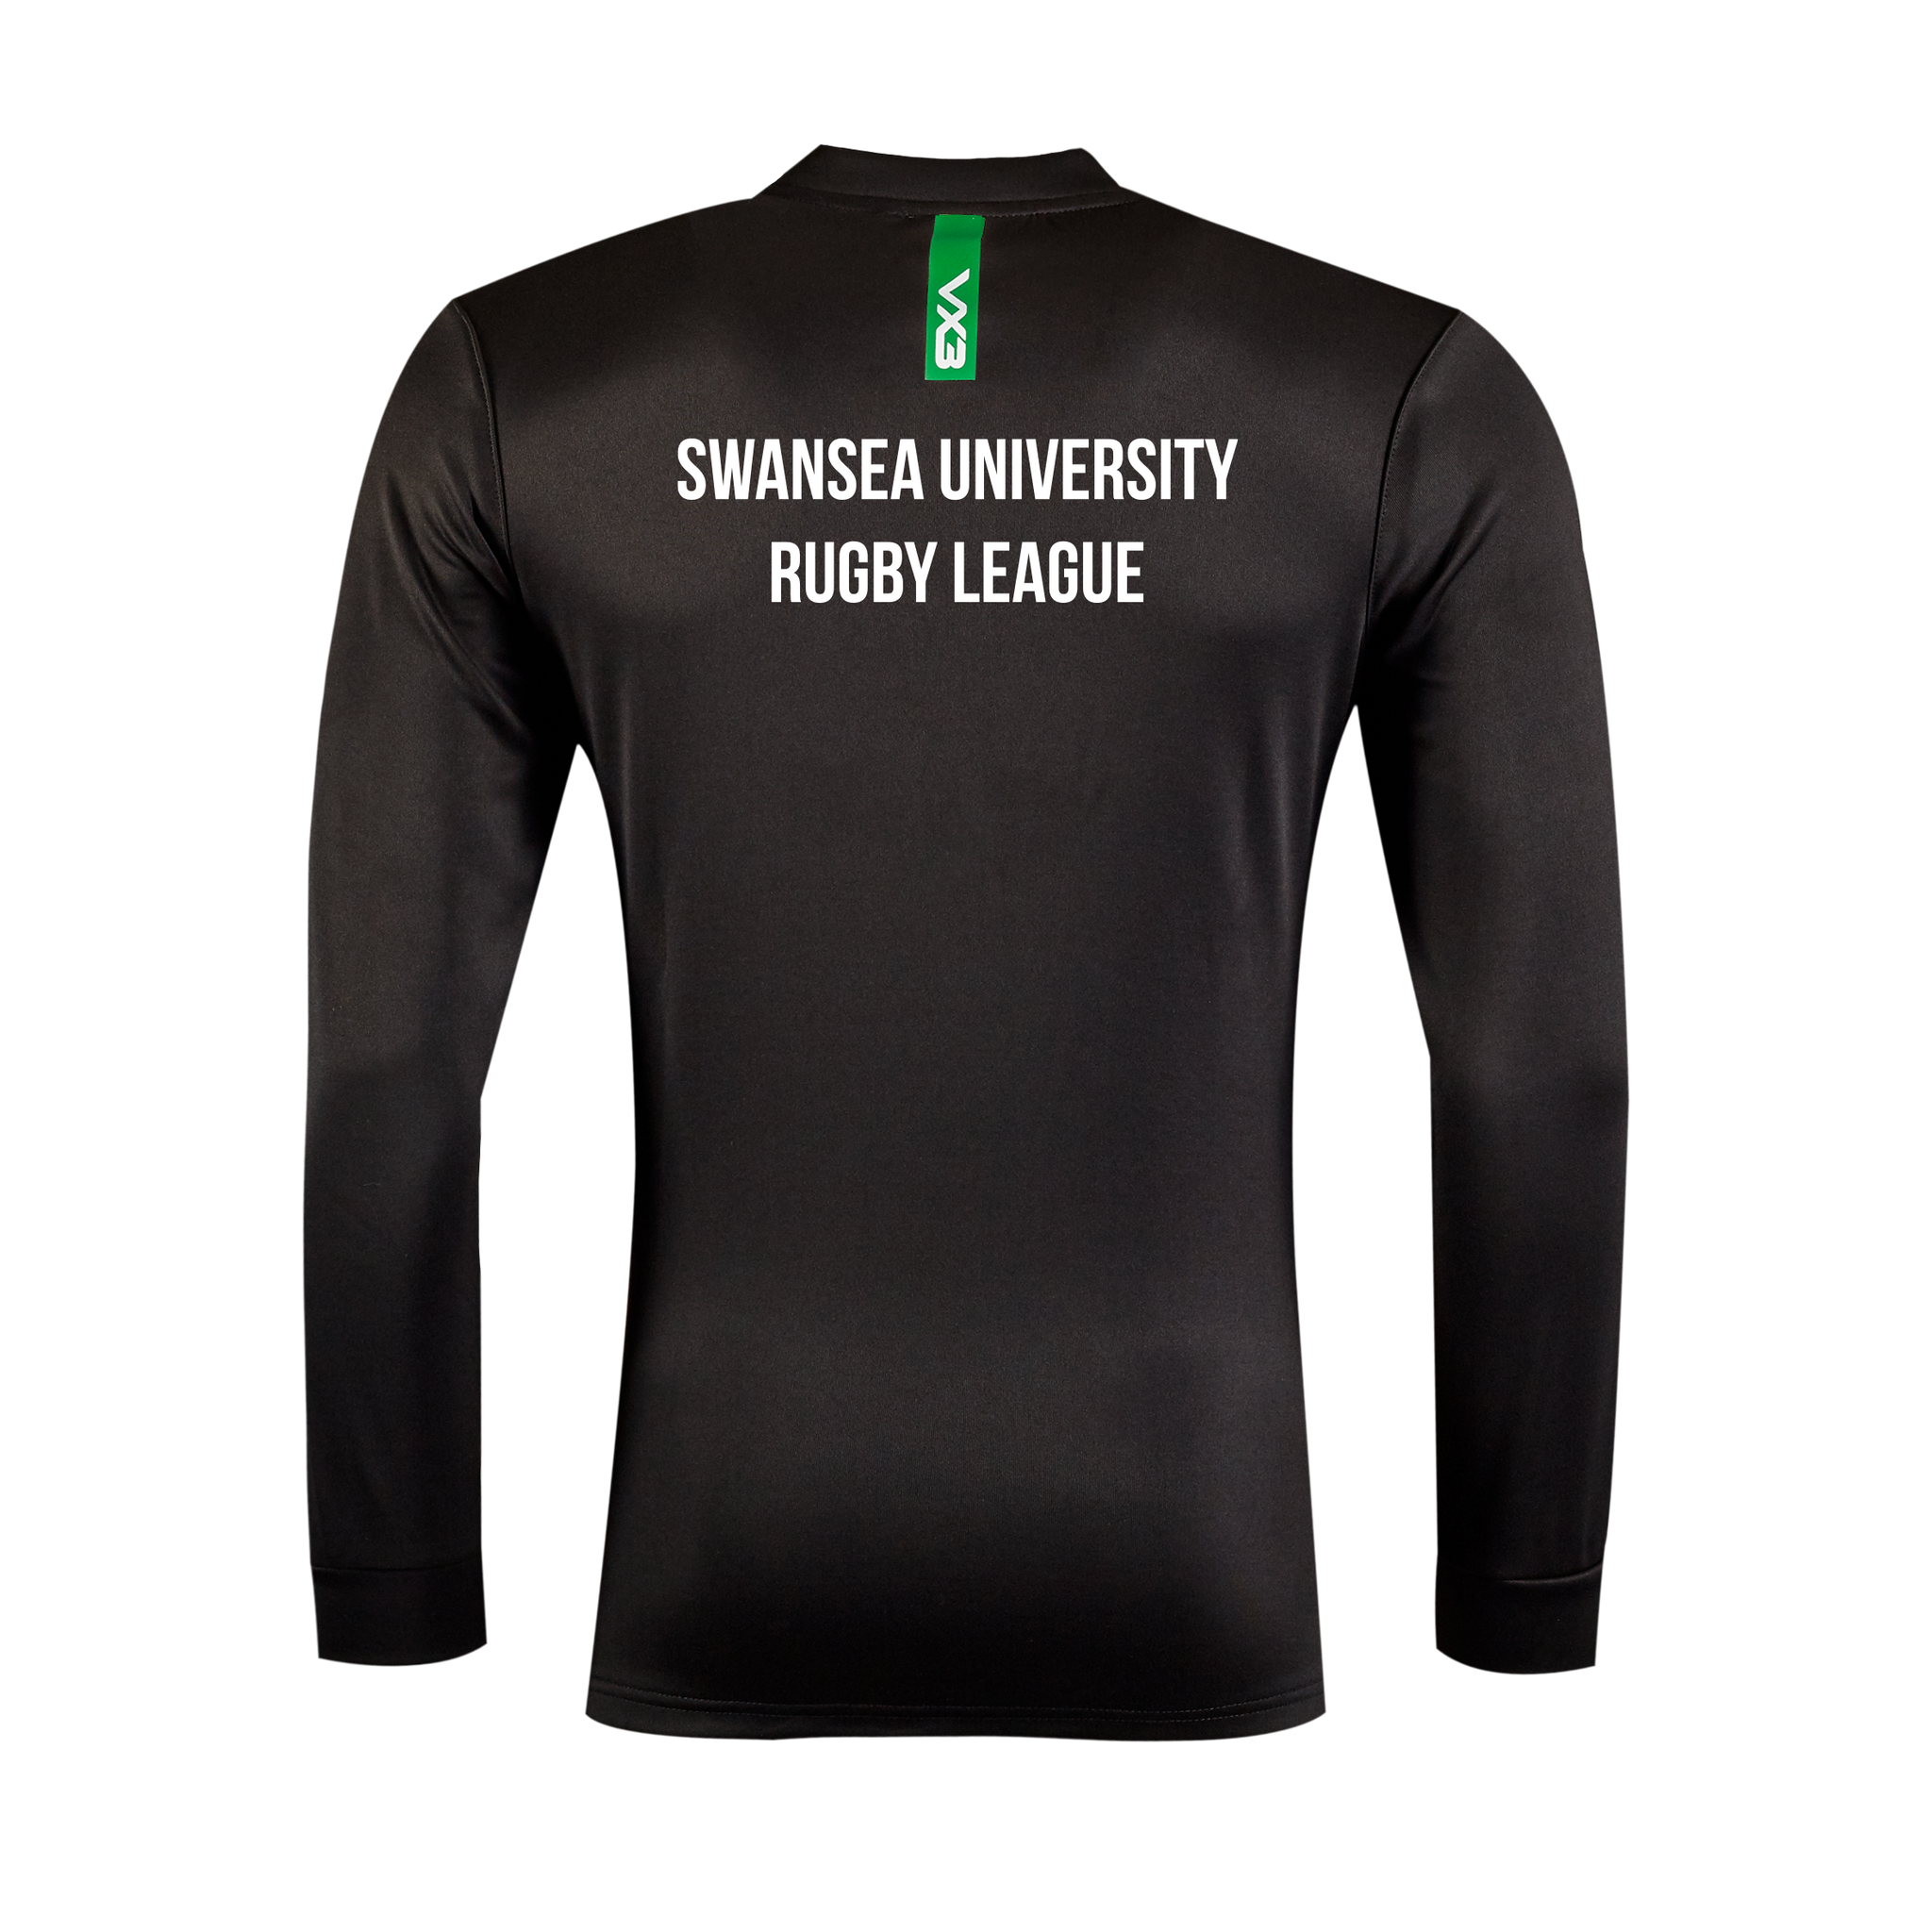 Swansea University Rugby League Fortis Presentation Jacket